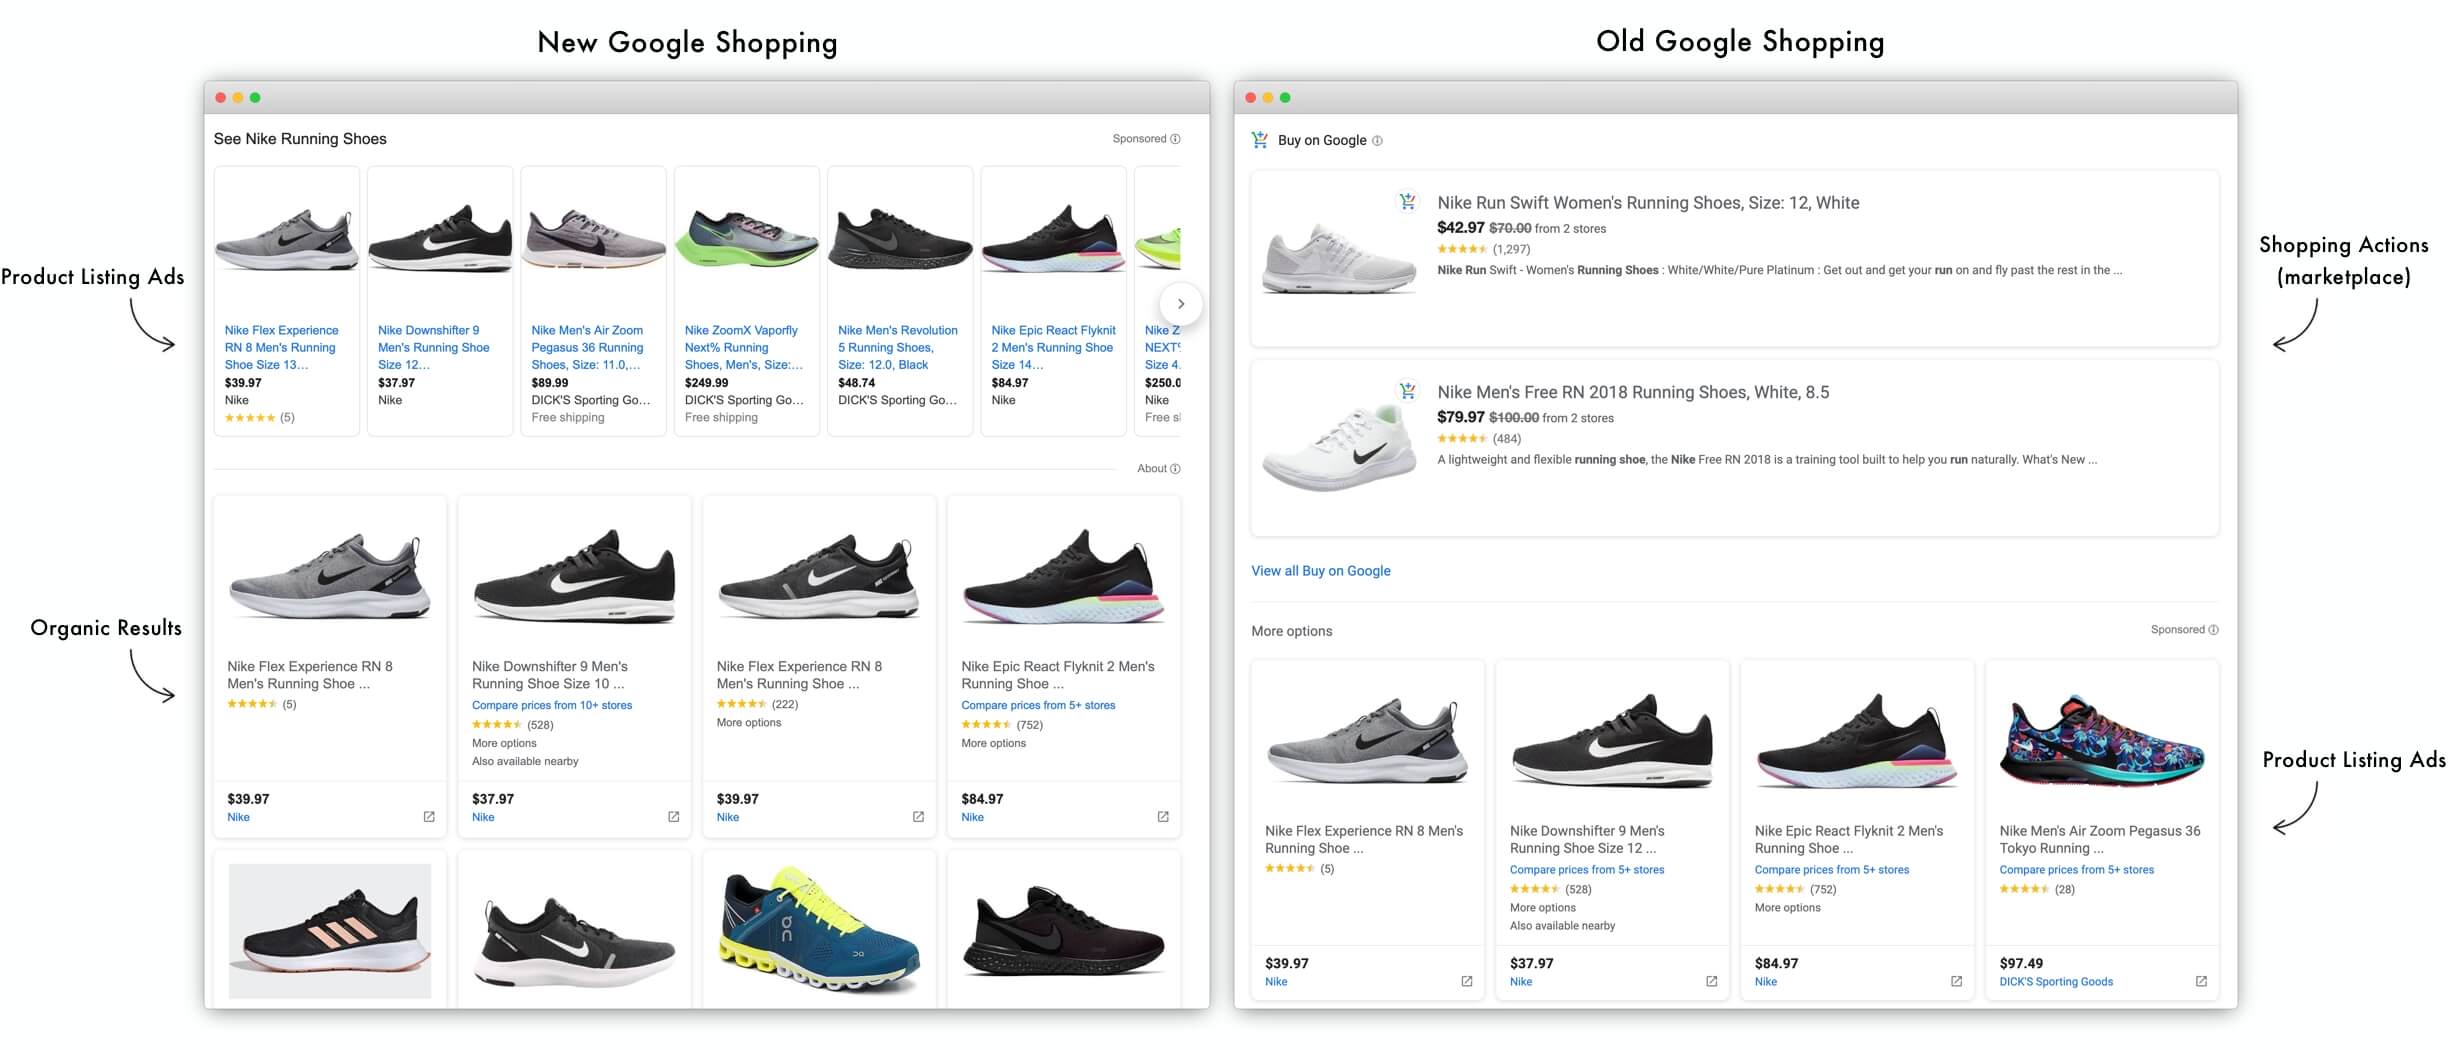 Old vs new Google Shopping